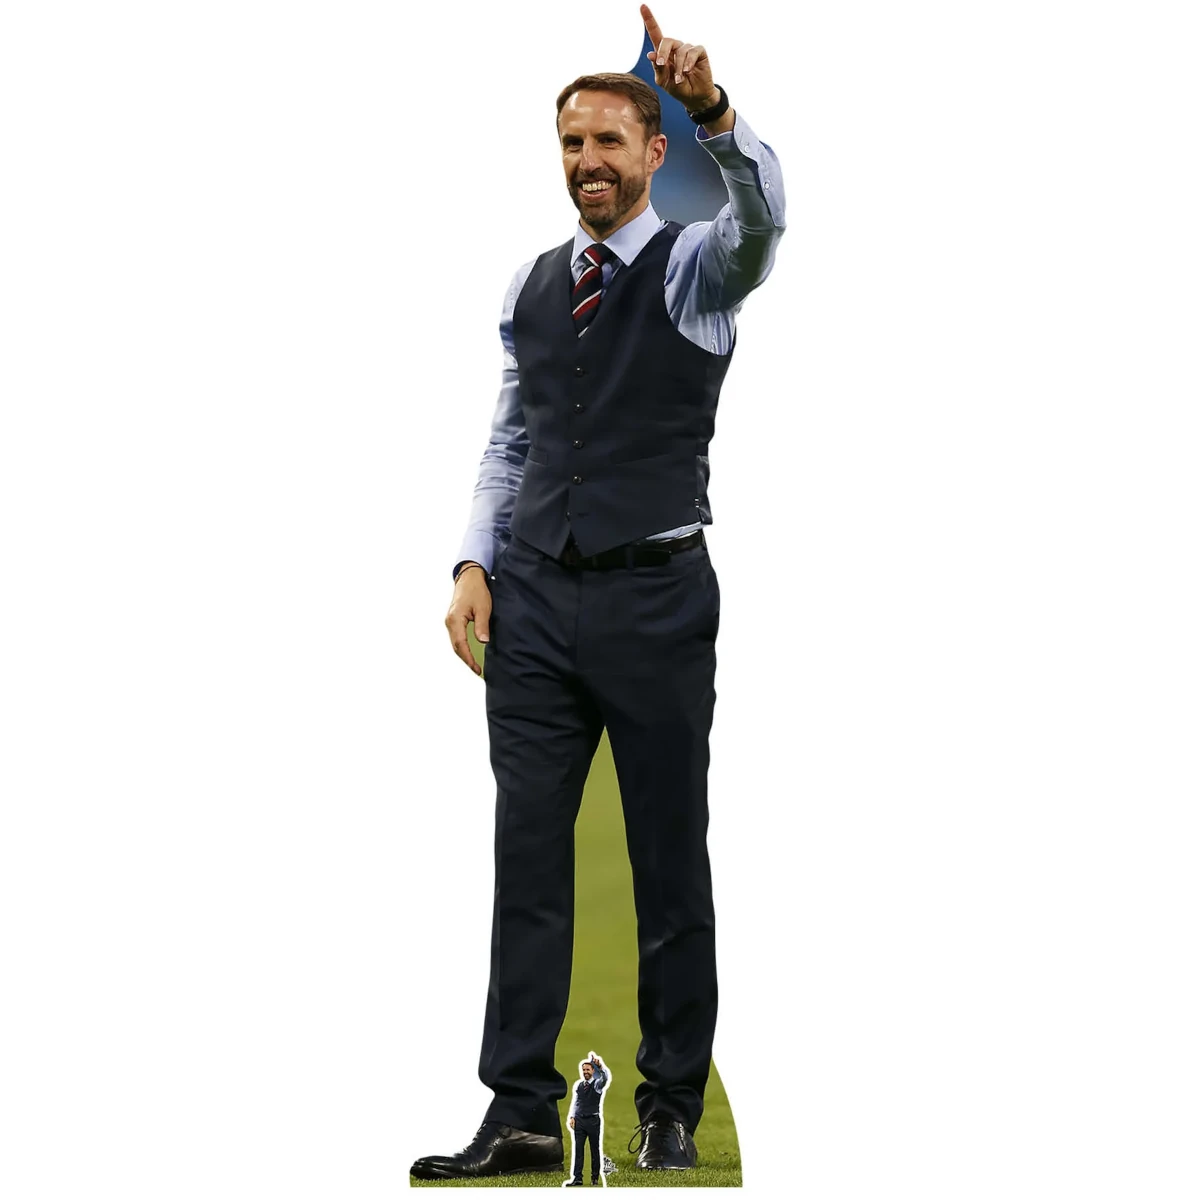 CS755 Gareth Southgate 'Waistcoat' (England Football Manager) Lifesize + Mini Cardboard Cutout Standee Front